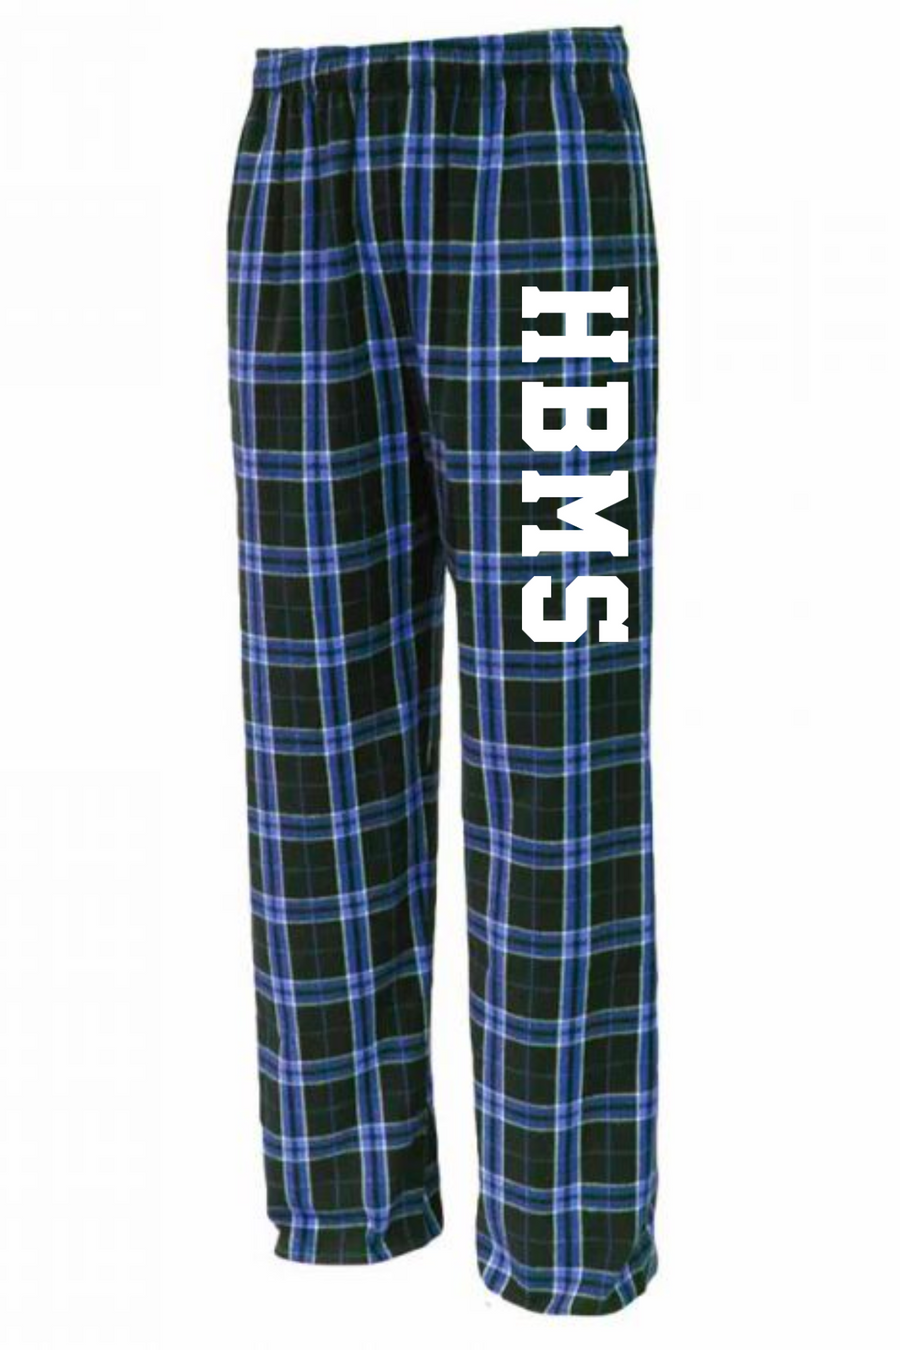 Holcomb Bridge Middle School Spirit Wear 23/24 On-Demand-Flannel Pants